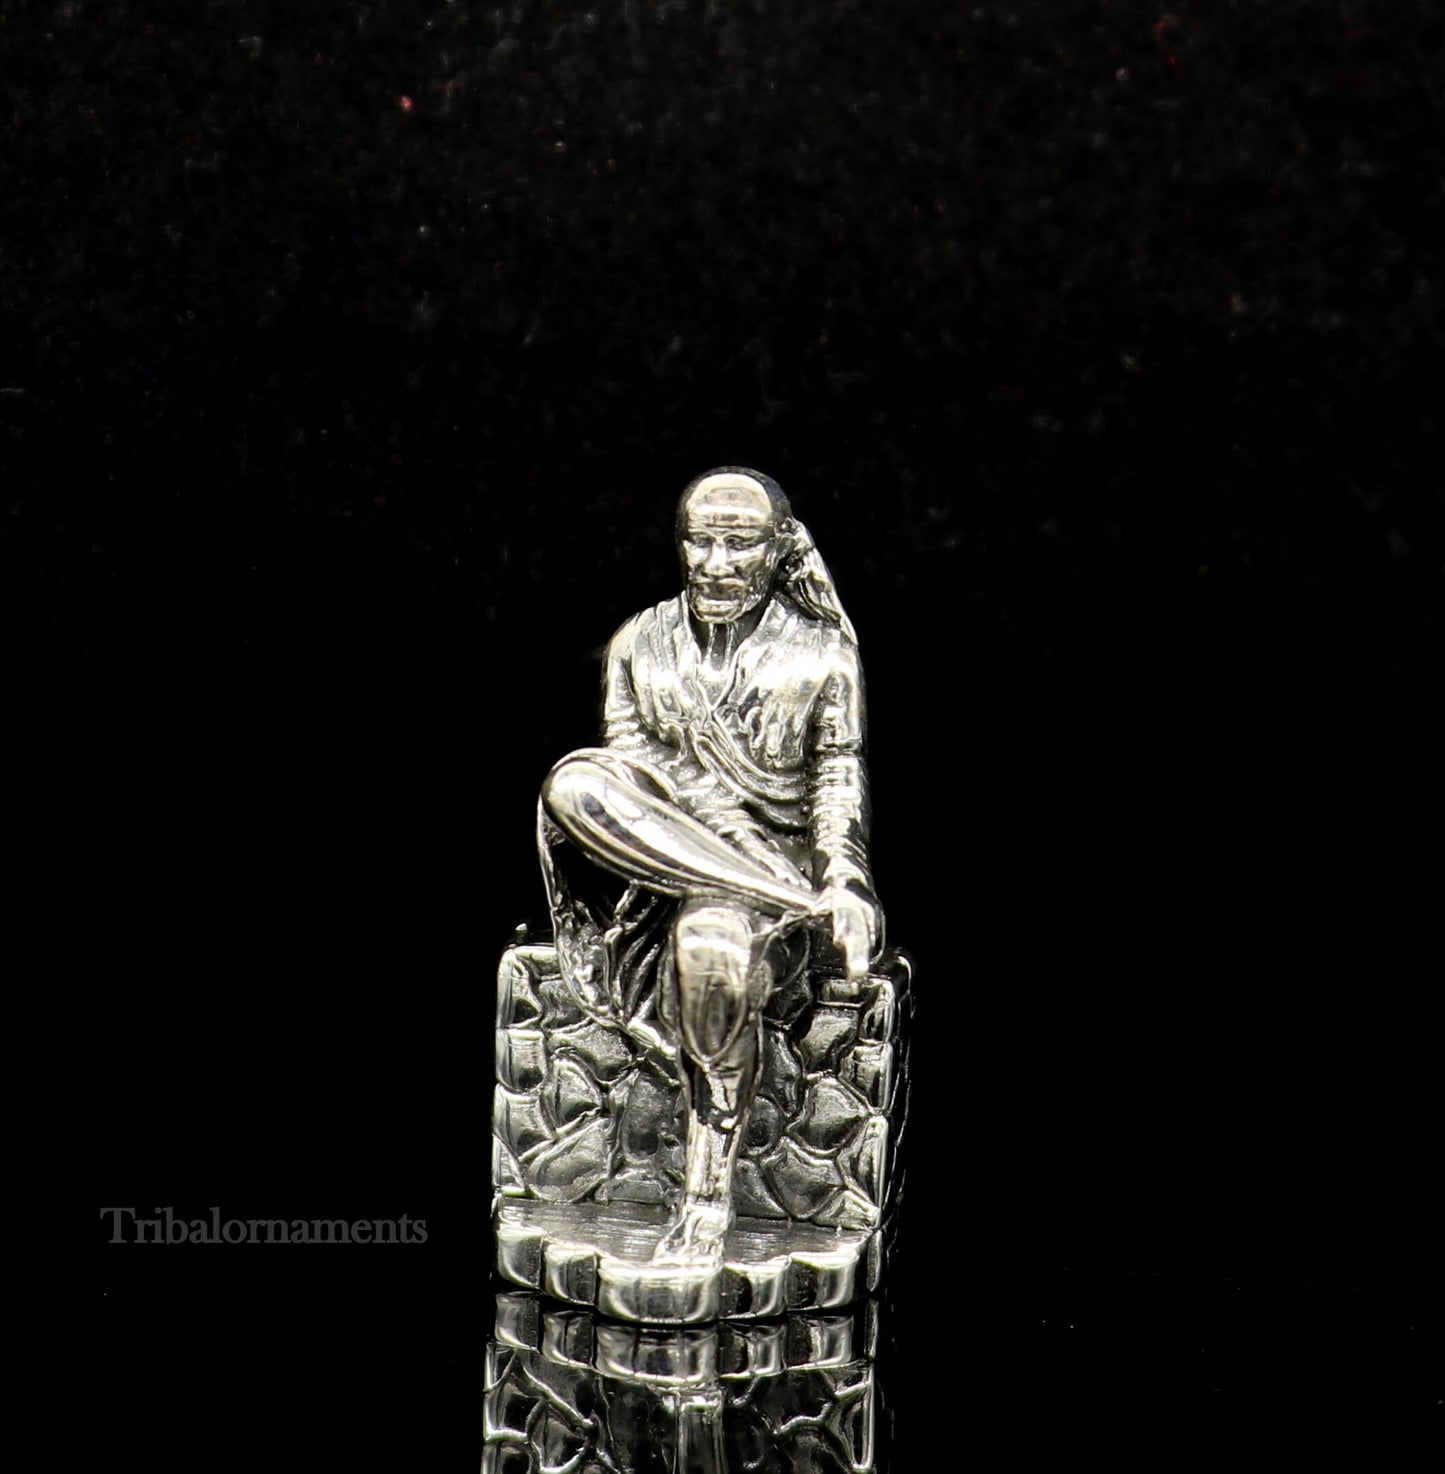 925 sterling silver handmade Divine Hindu idol deity Sai Baba statue murti divine Statue Sculpture figurine puja article gifting art155 - TRIBAL ORNAMENTS